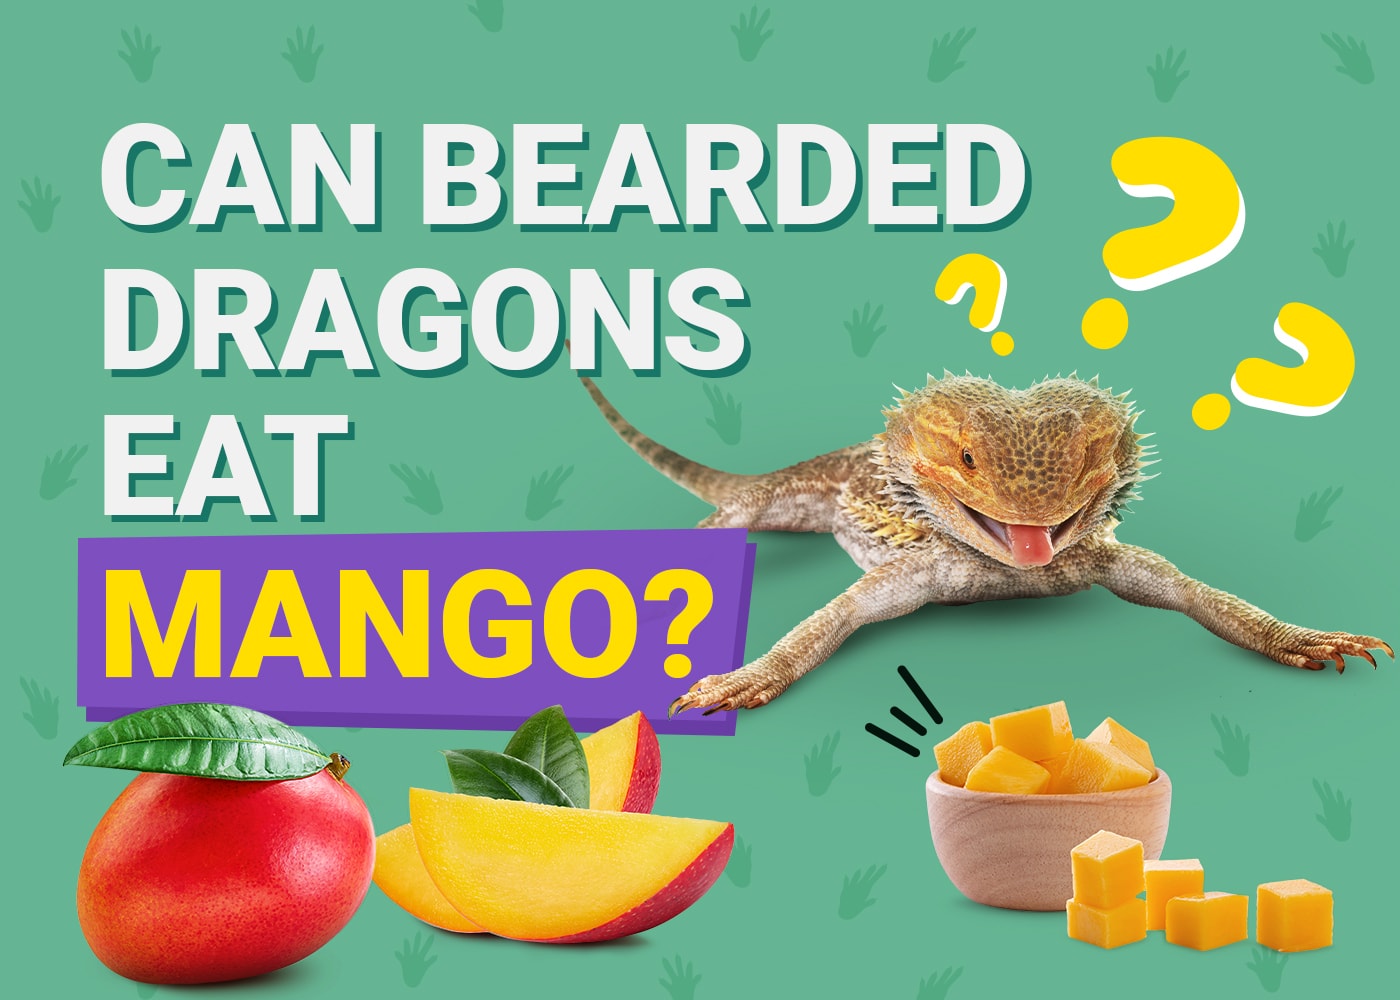 Can Bearded Dragons Eat Mango Skin?